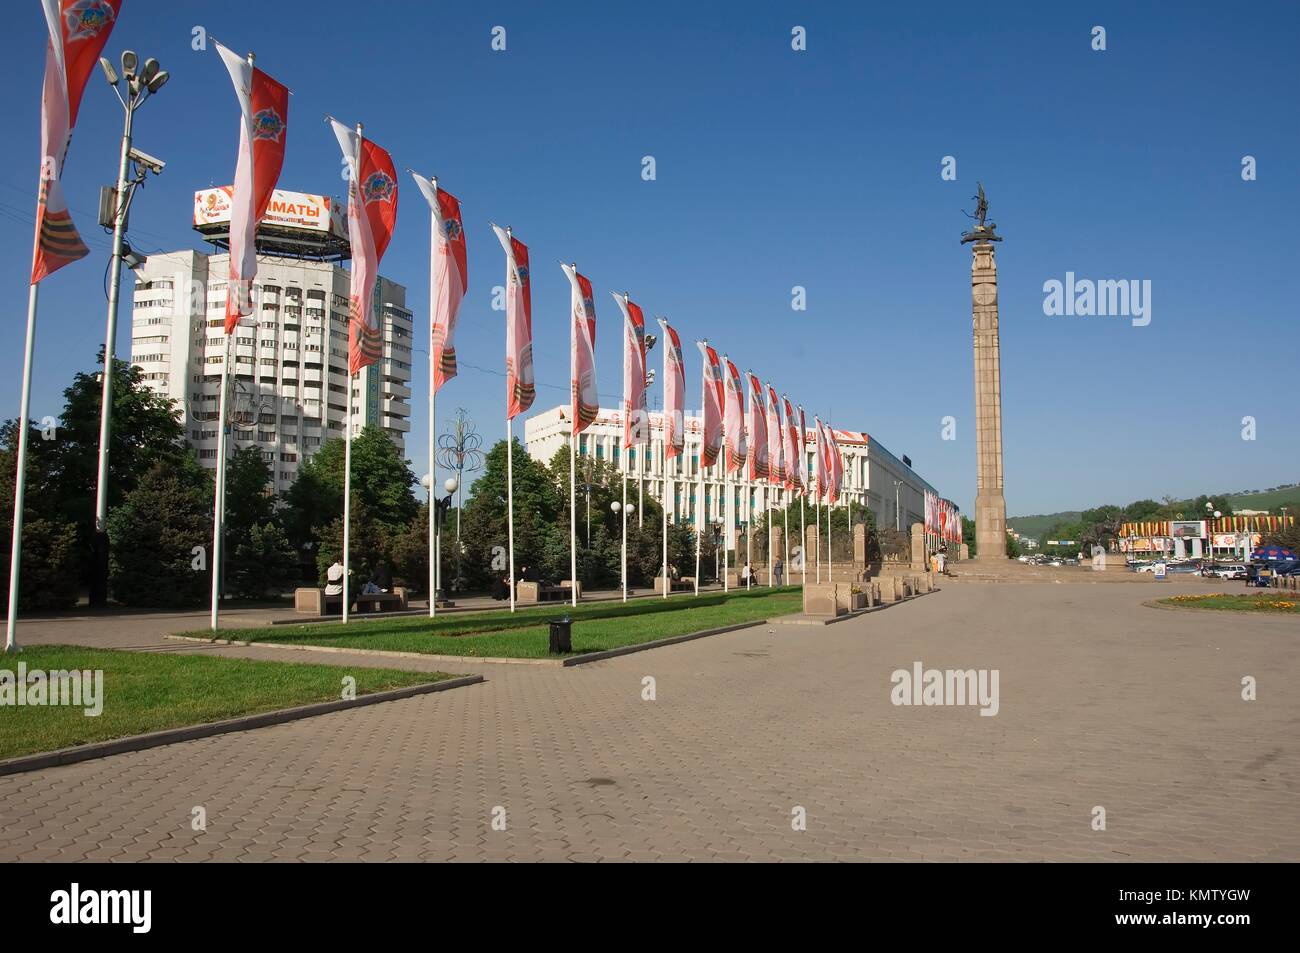 La plaza de la independencia, Almaty, Kazajstán Foto de stock